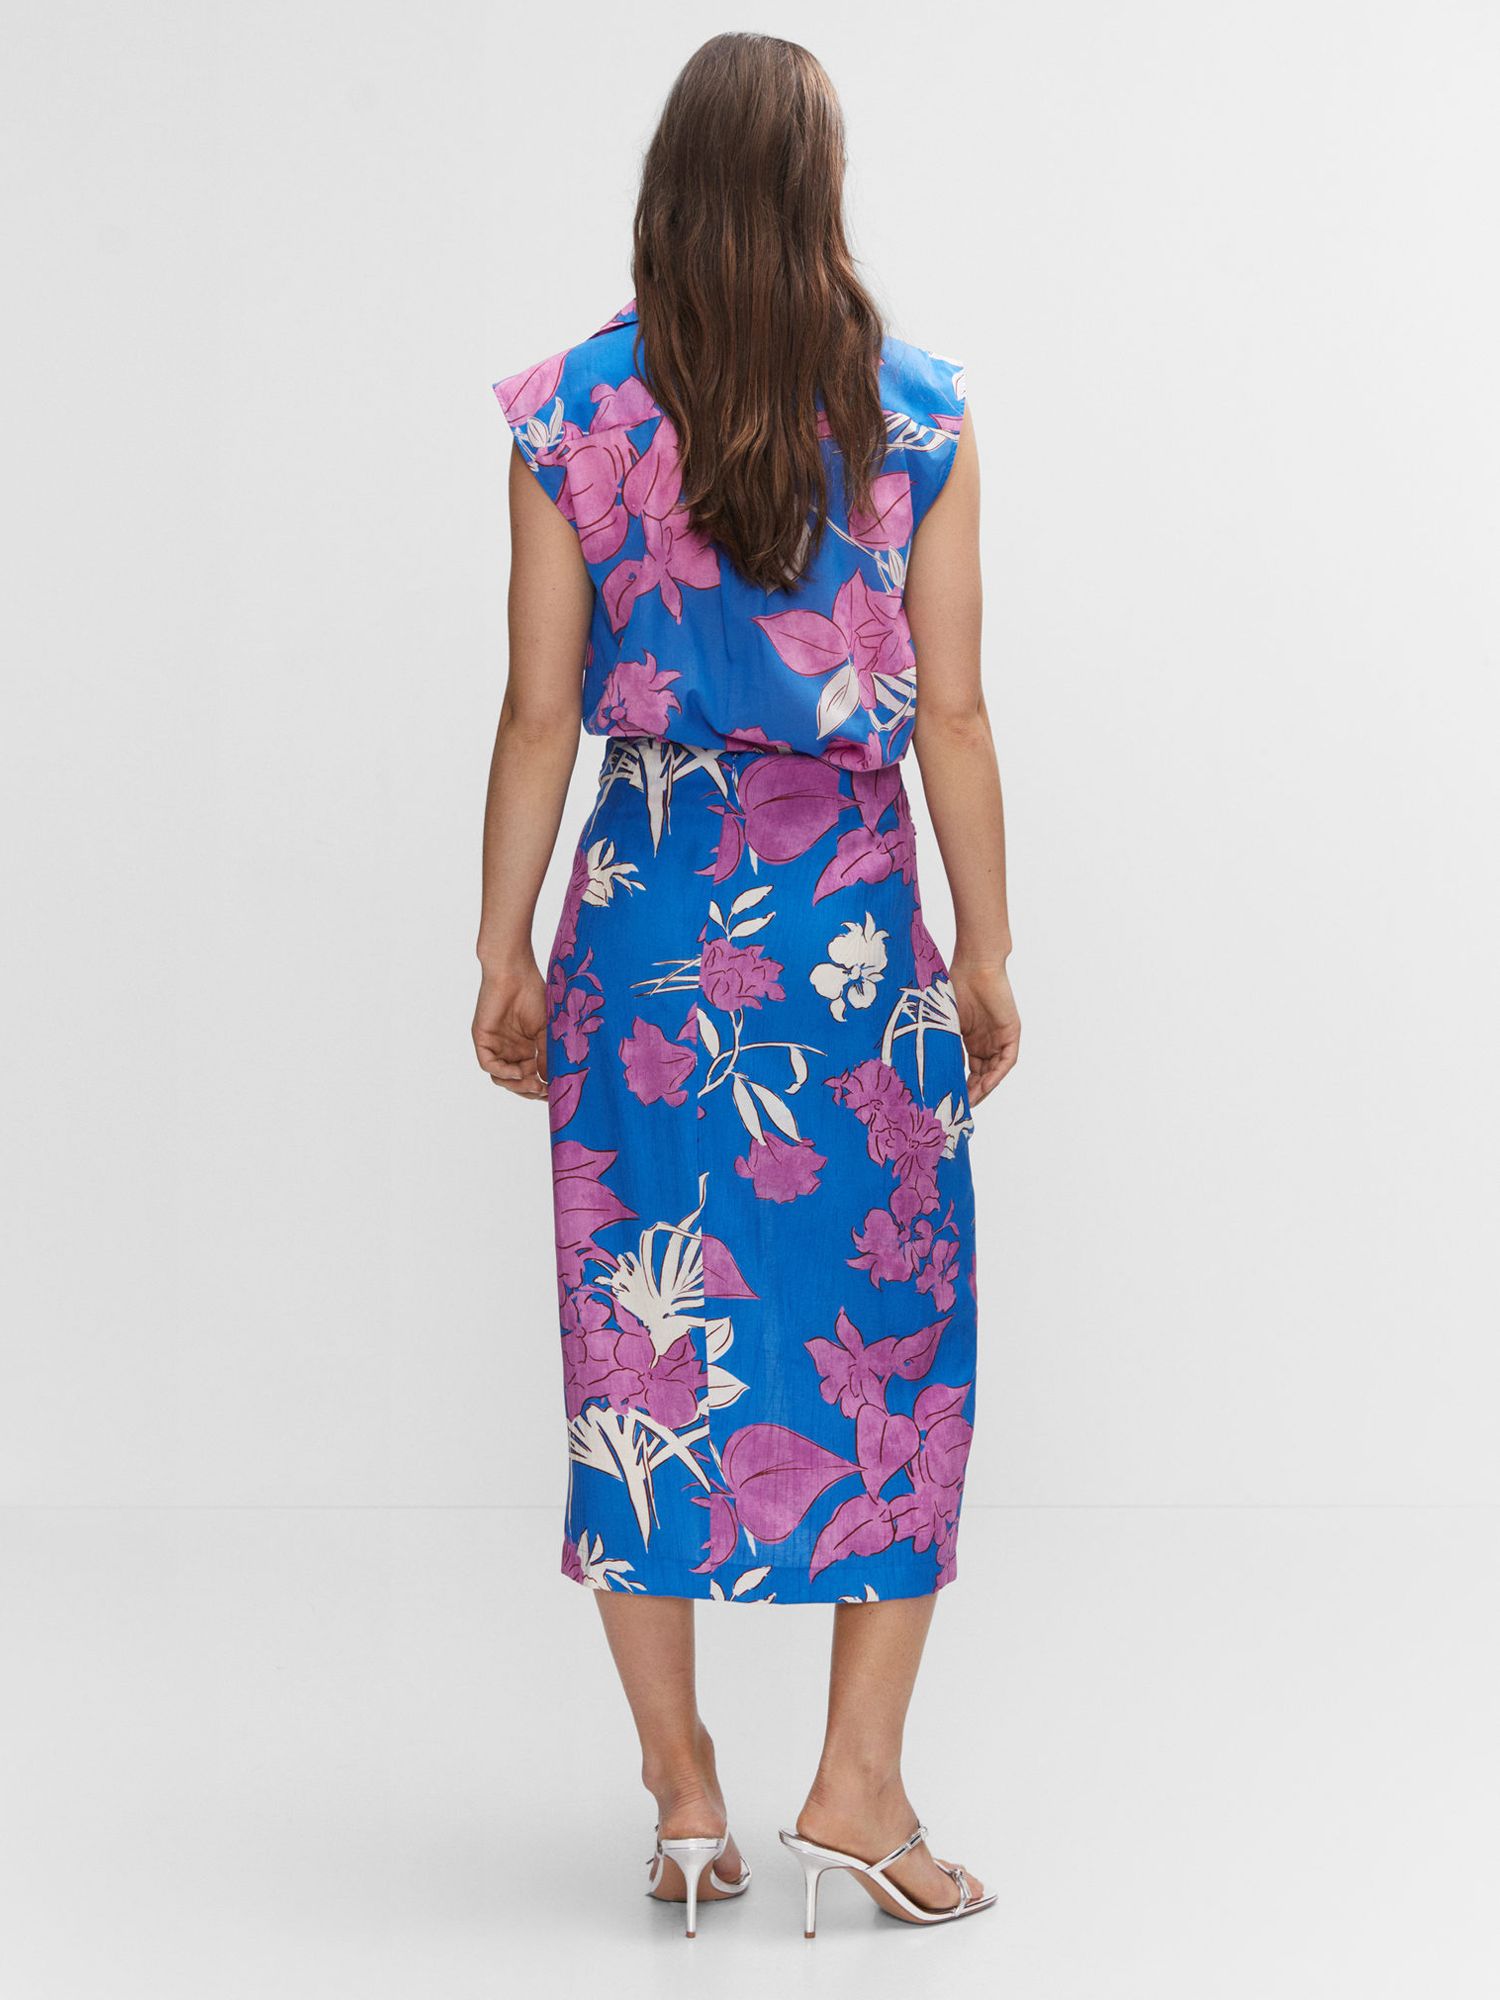 Mango Nuti Knot Detail Skirt, Medium Blue at John Lewis & Partners